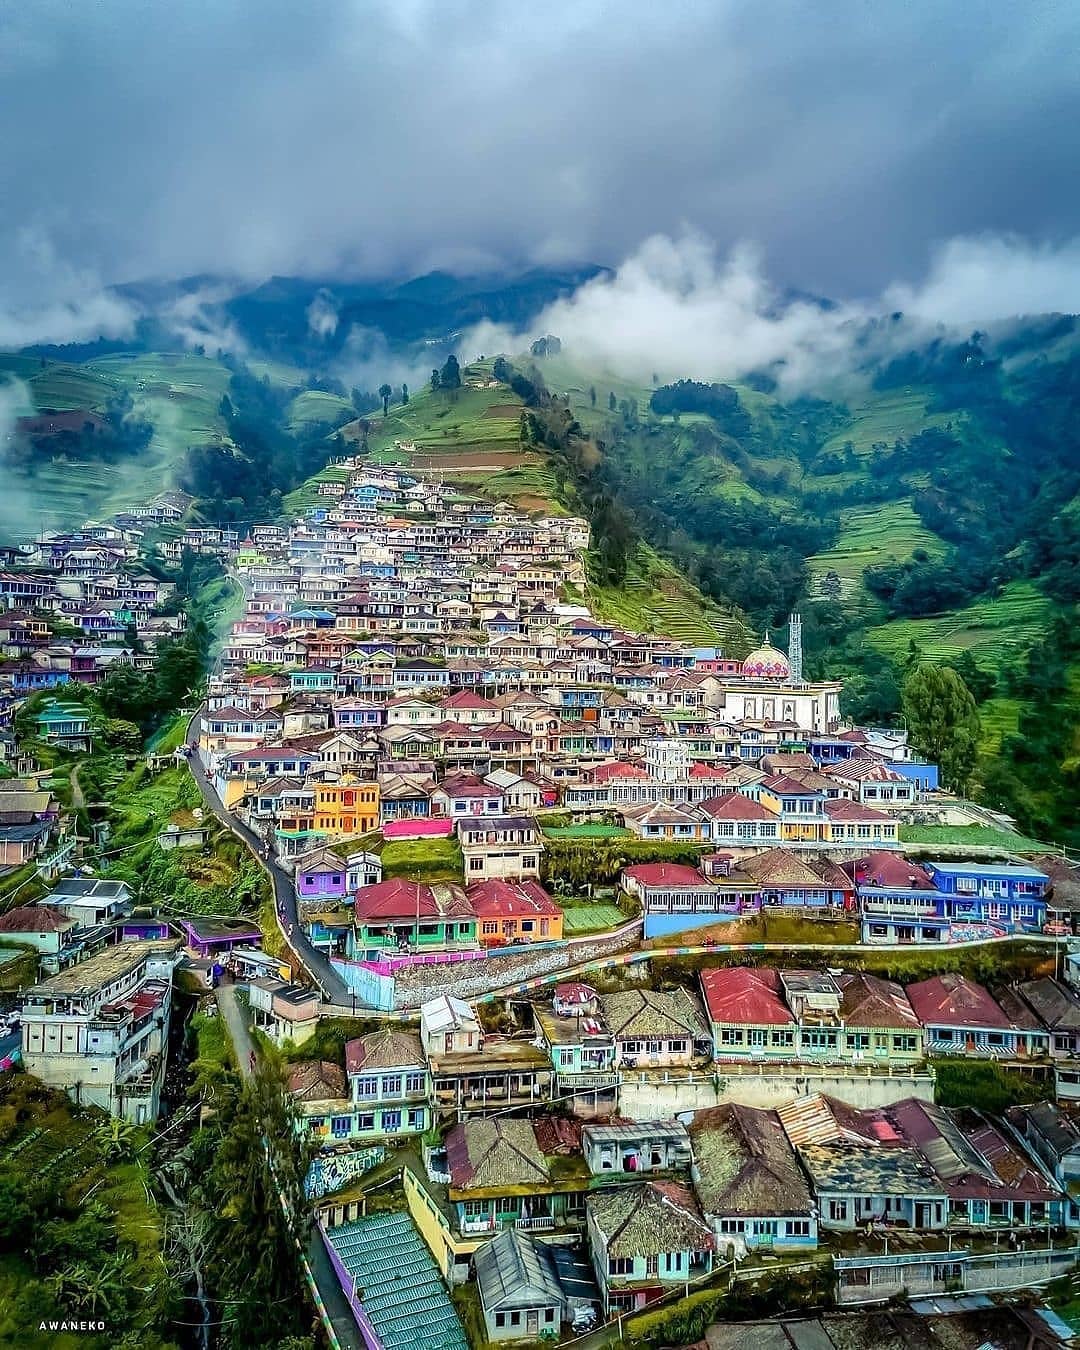 Nepal van Java Magelang [year], Harga Tiket Masuk dan Lokasinya